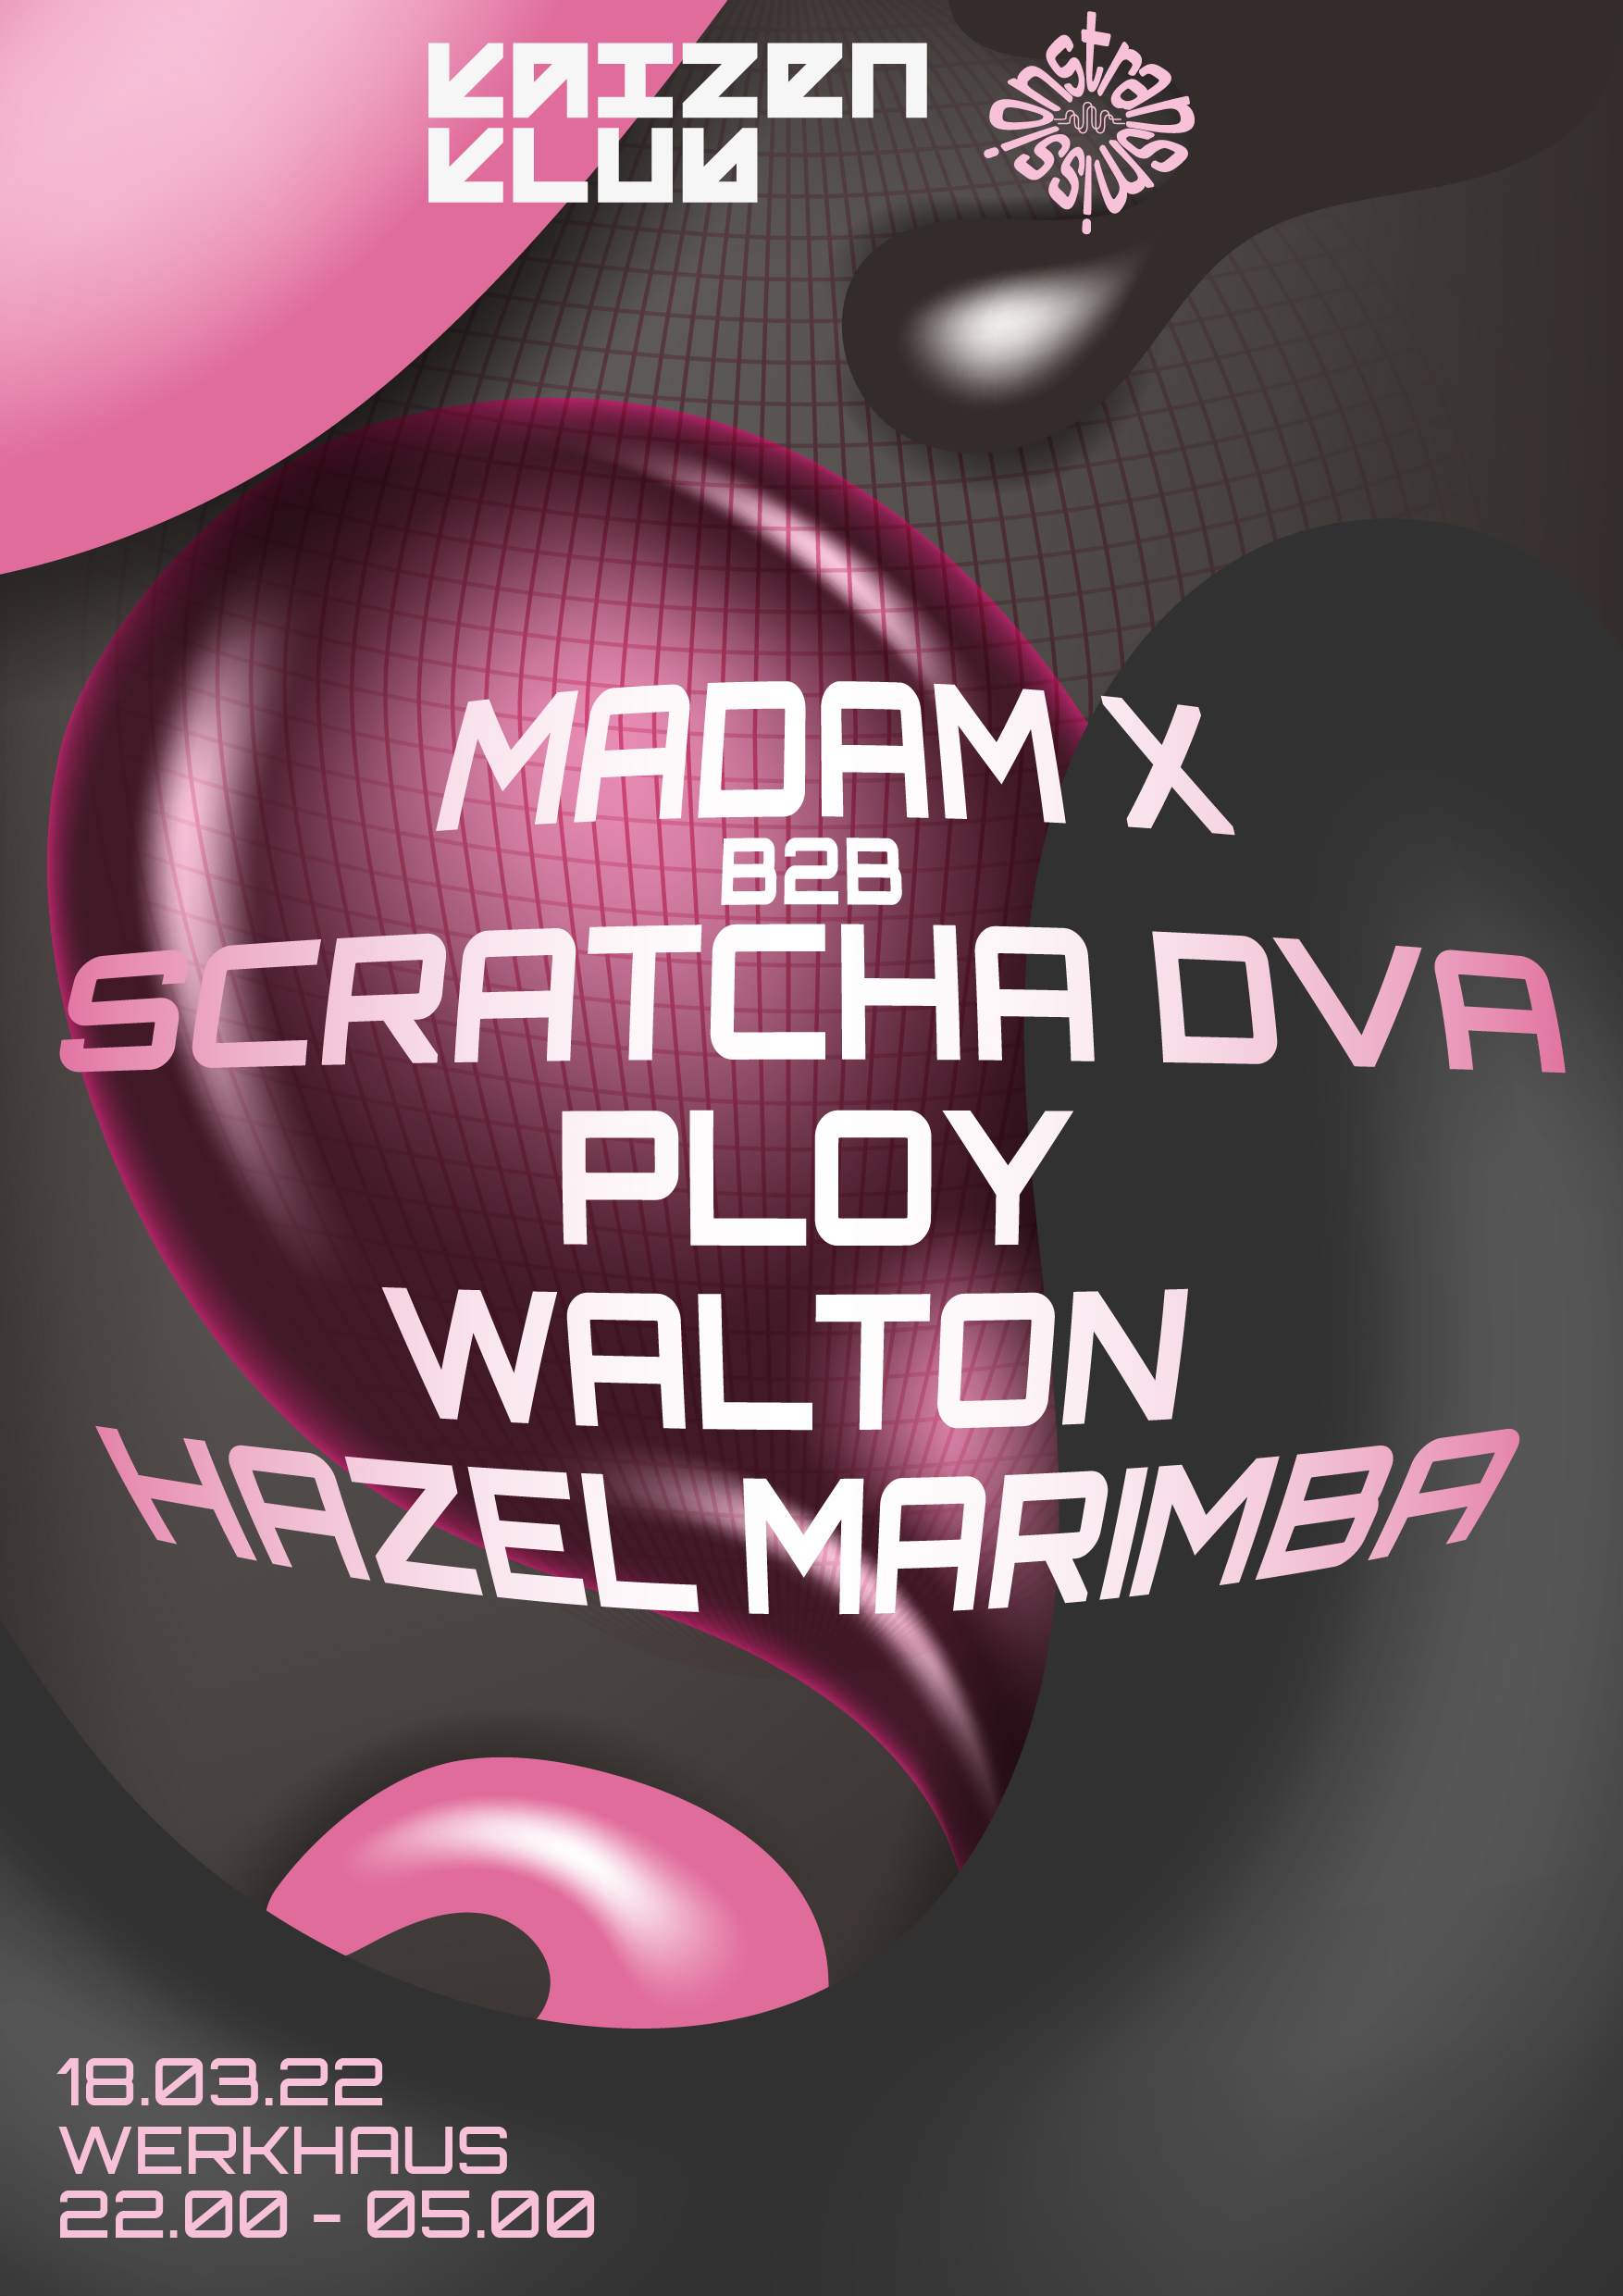 [POSTPONED] Kaizen Klub with Madam X b2b Scratcha DVA, Ploy, Walton & Hazel Marimba - Página frontal